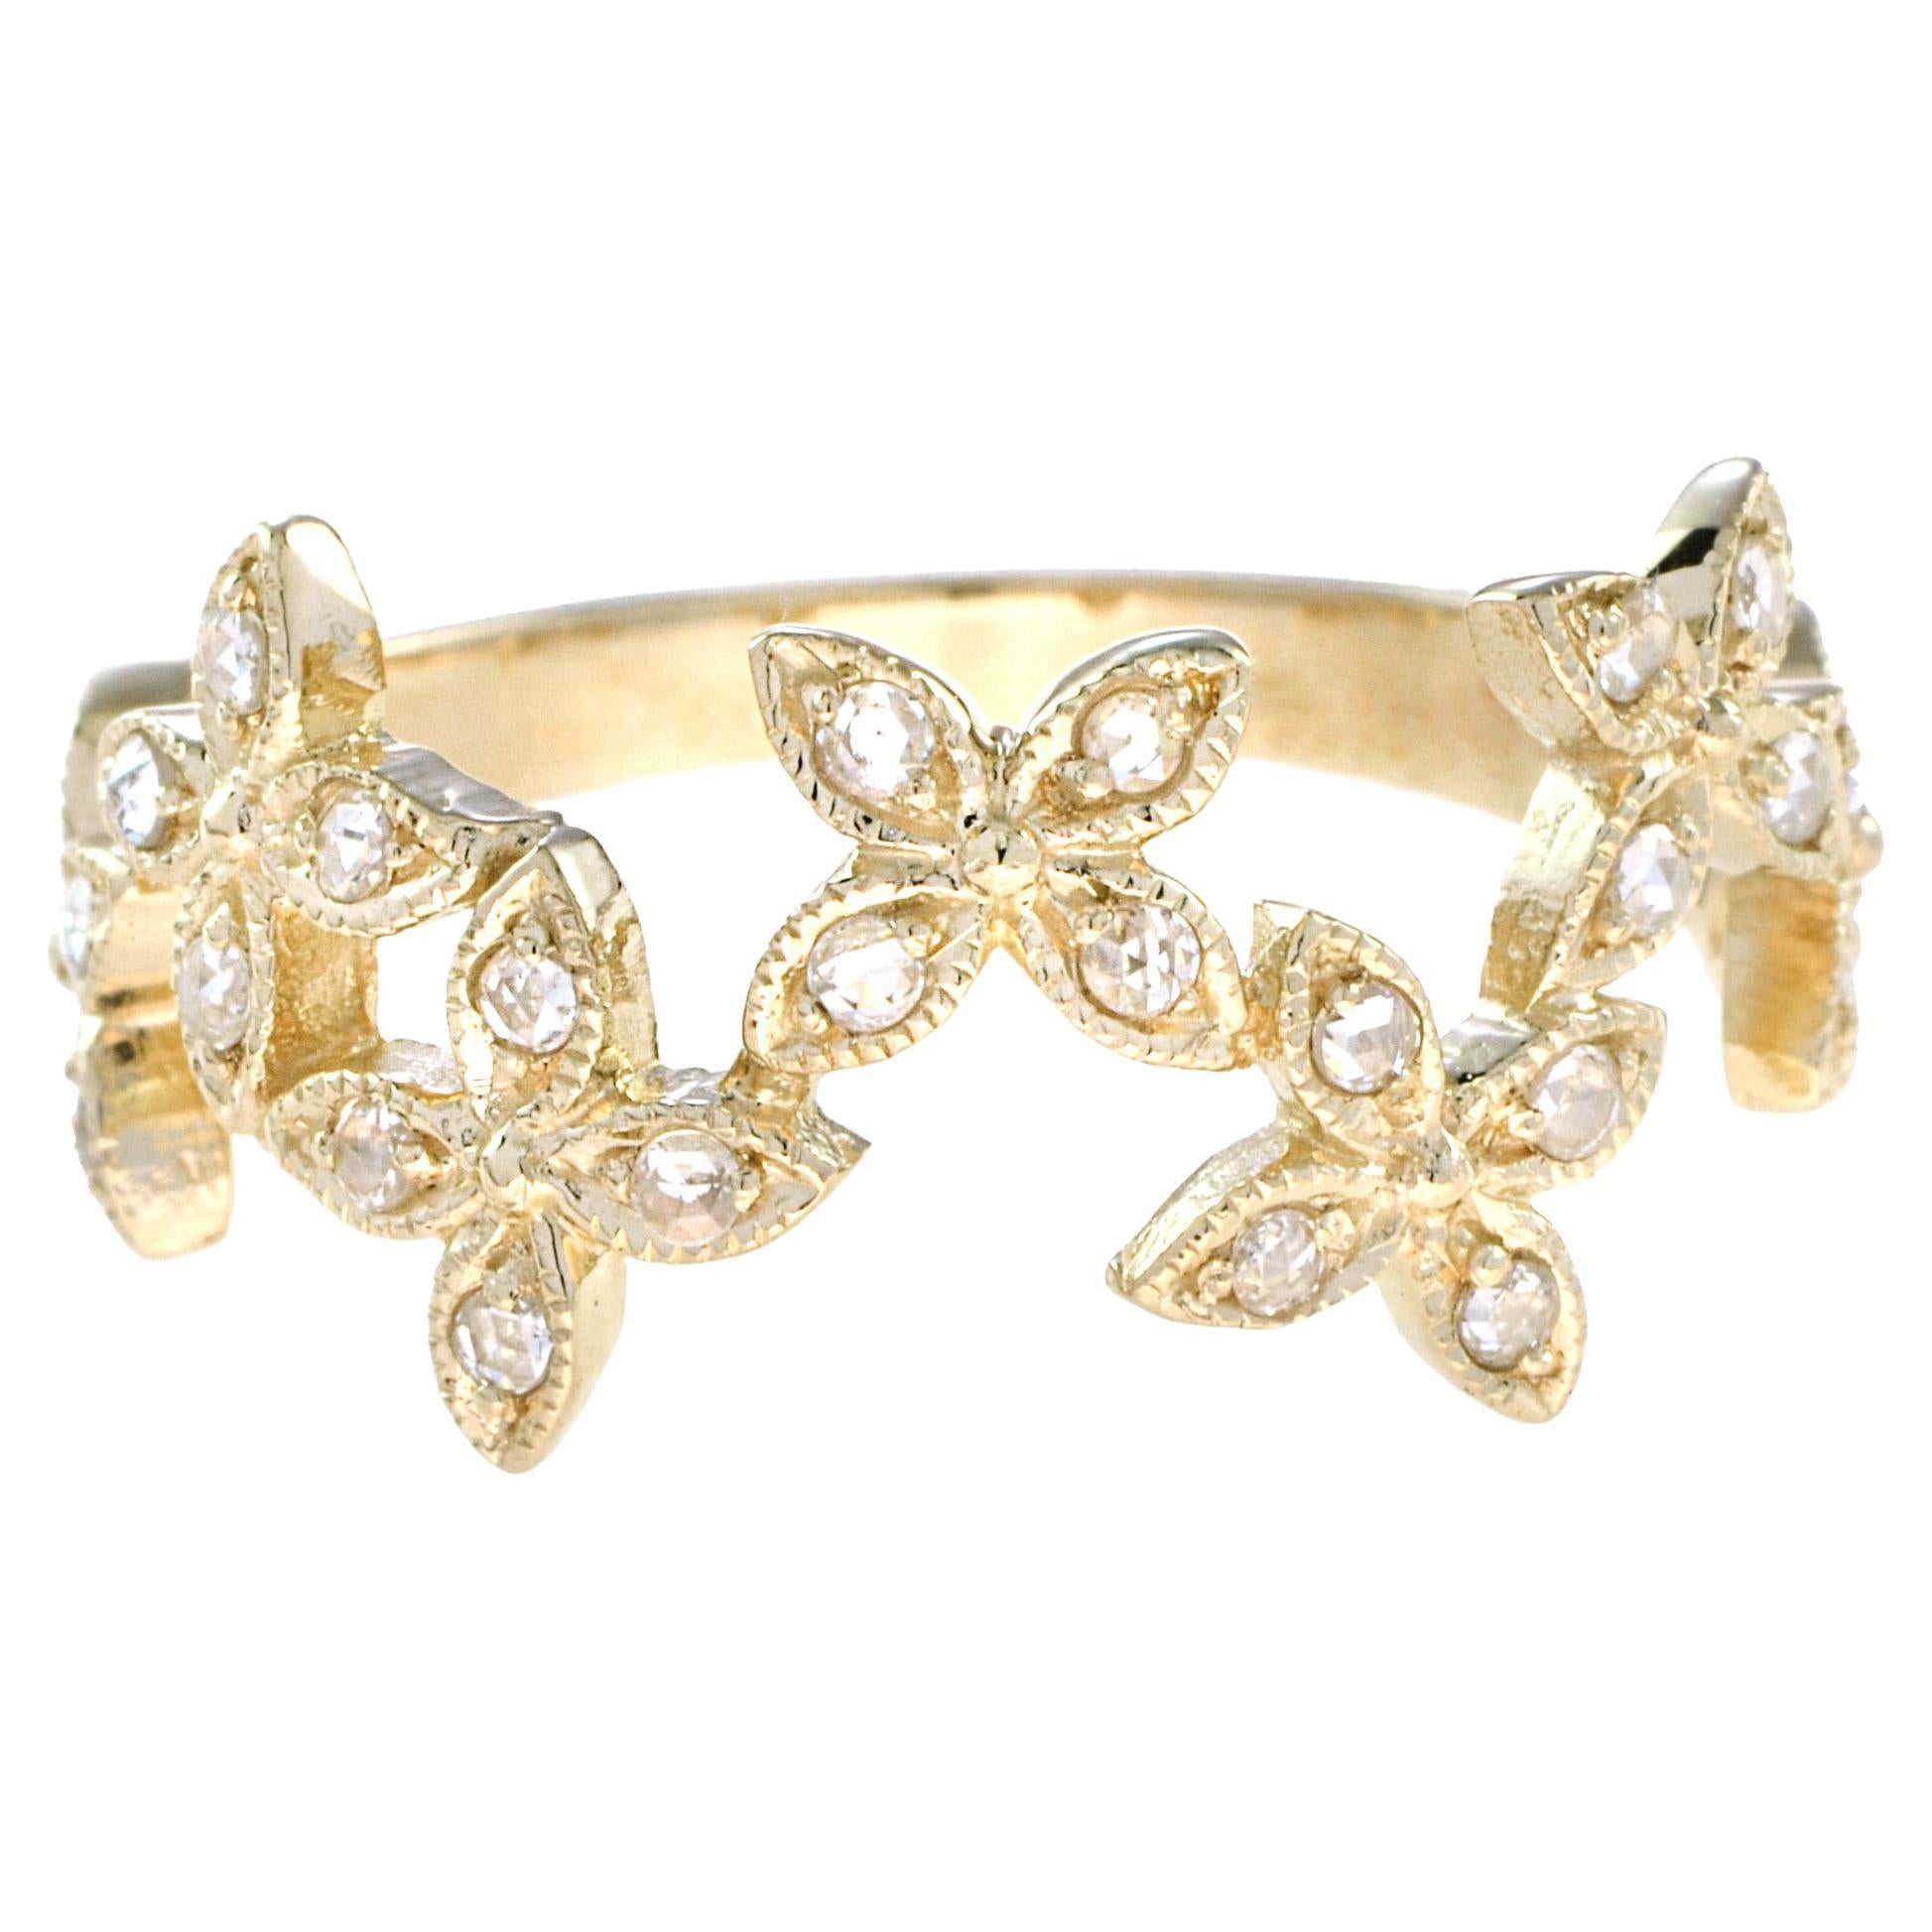 Vintage Style Diamond Half Eternity Flower Ring in 14K Yellow Gold